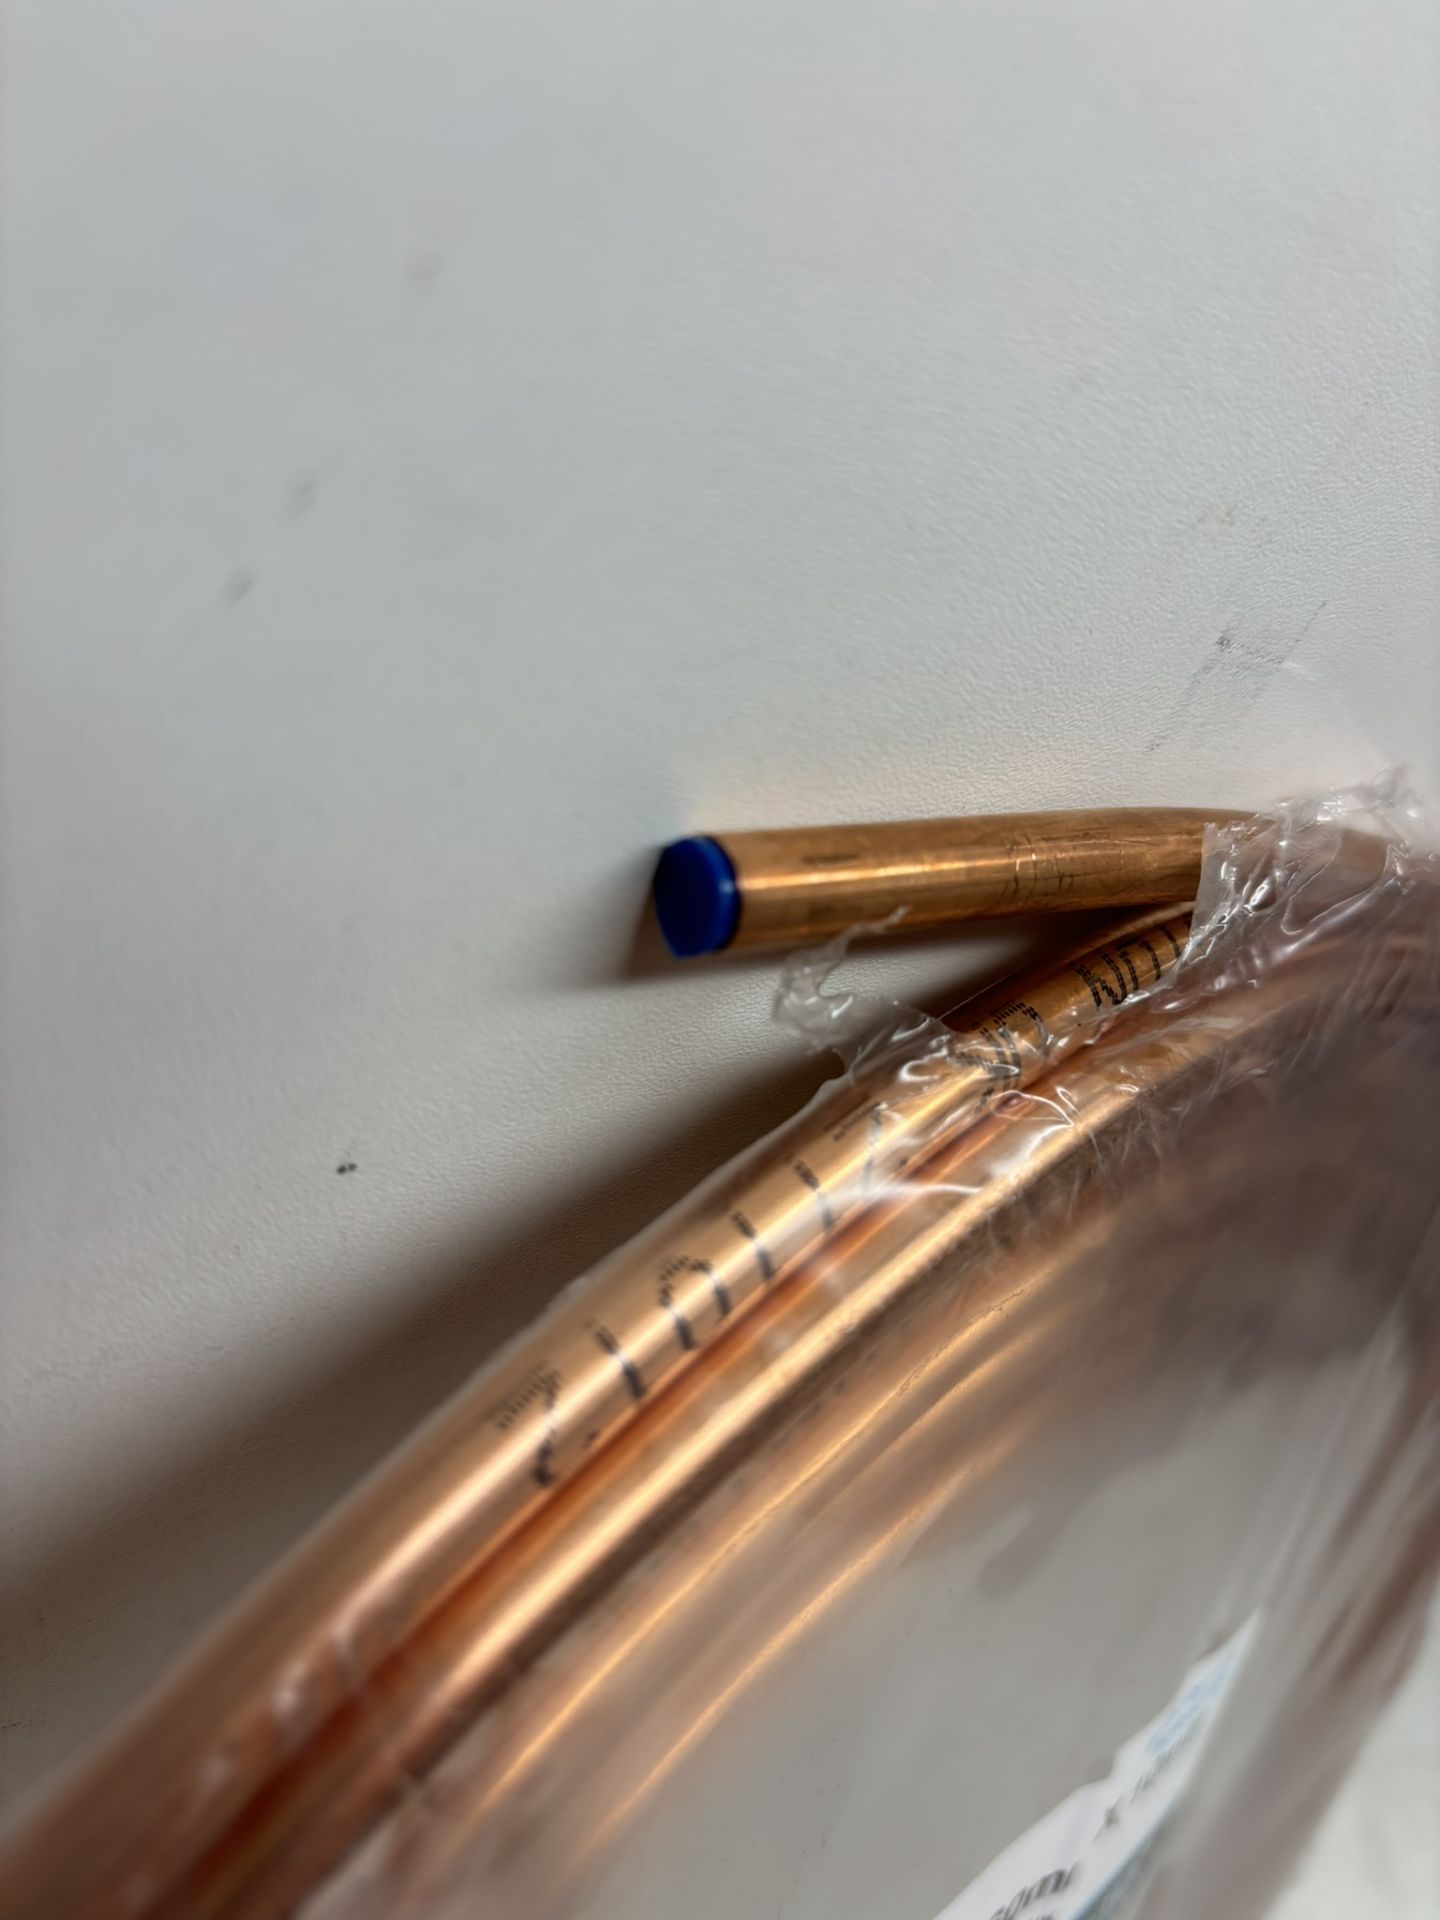 5 x Lawton 8.00mm x 0.60mm x 10Mtr Copper Plumbing Tube Coils - Image 4 of 9